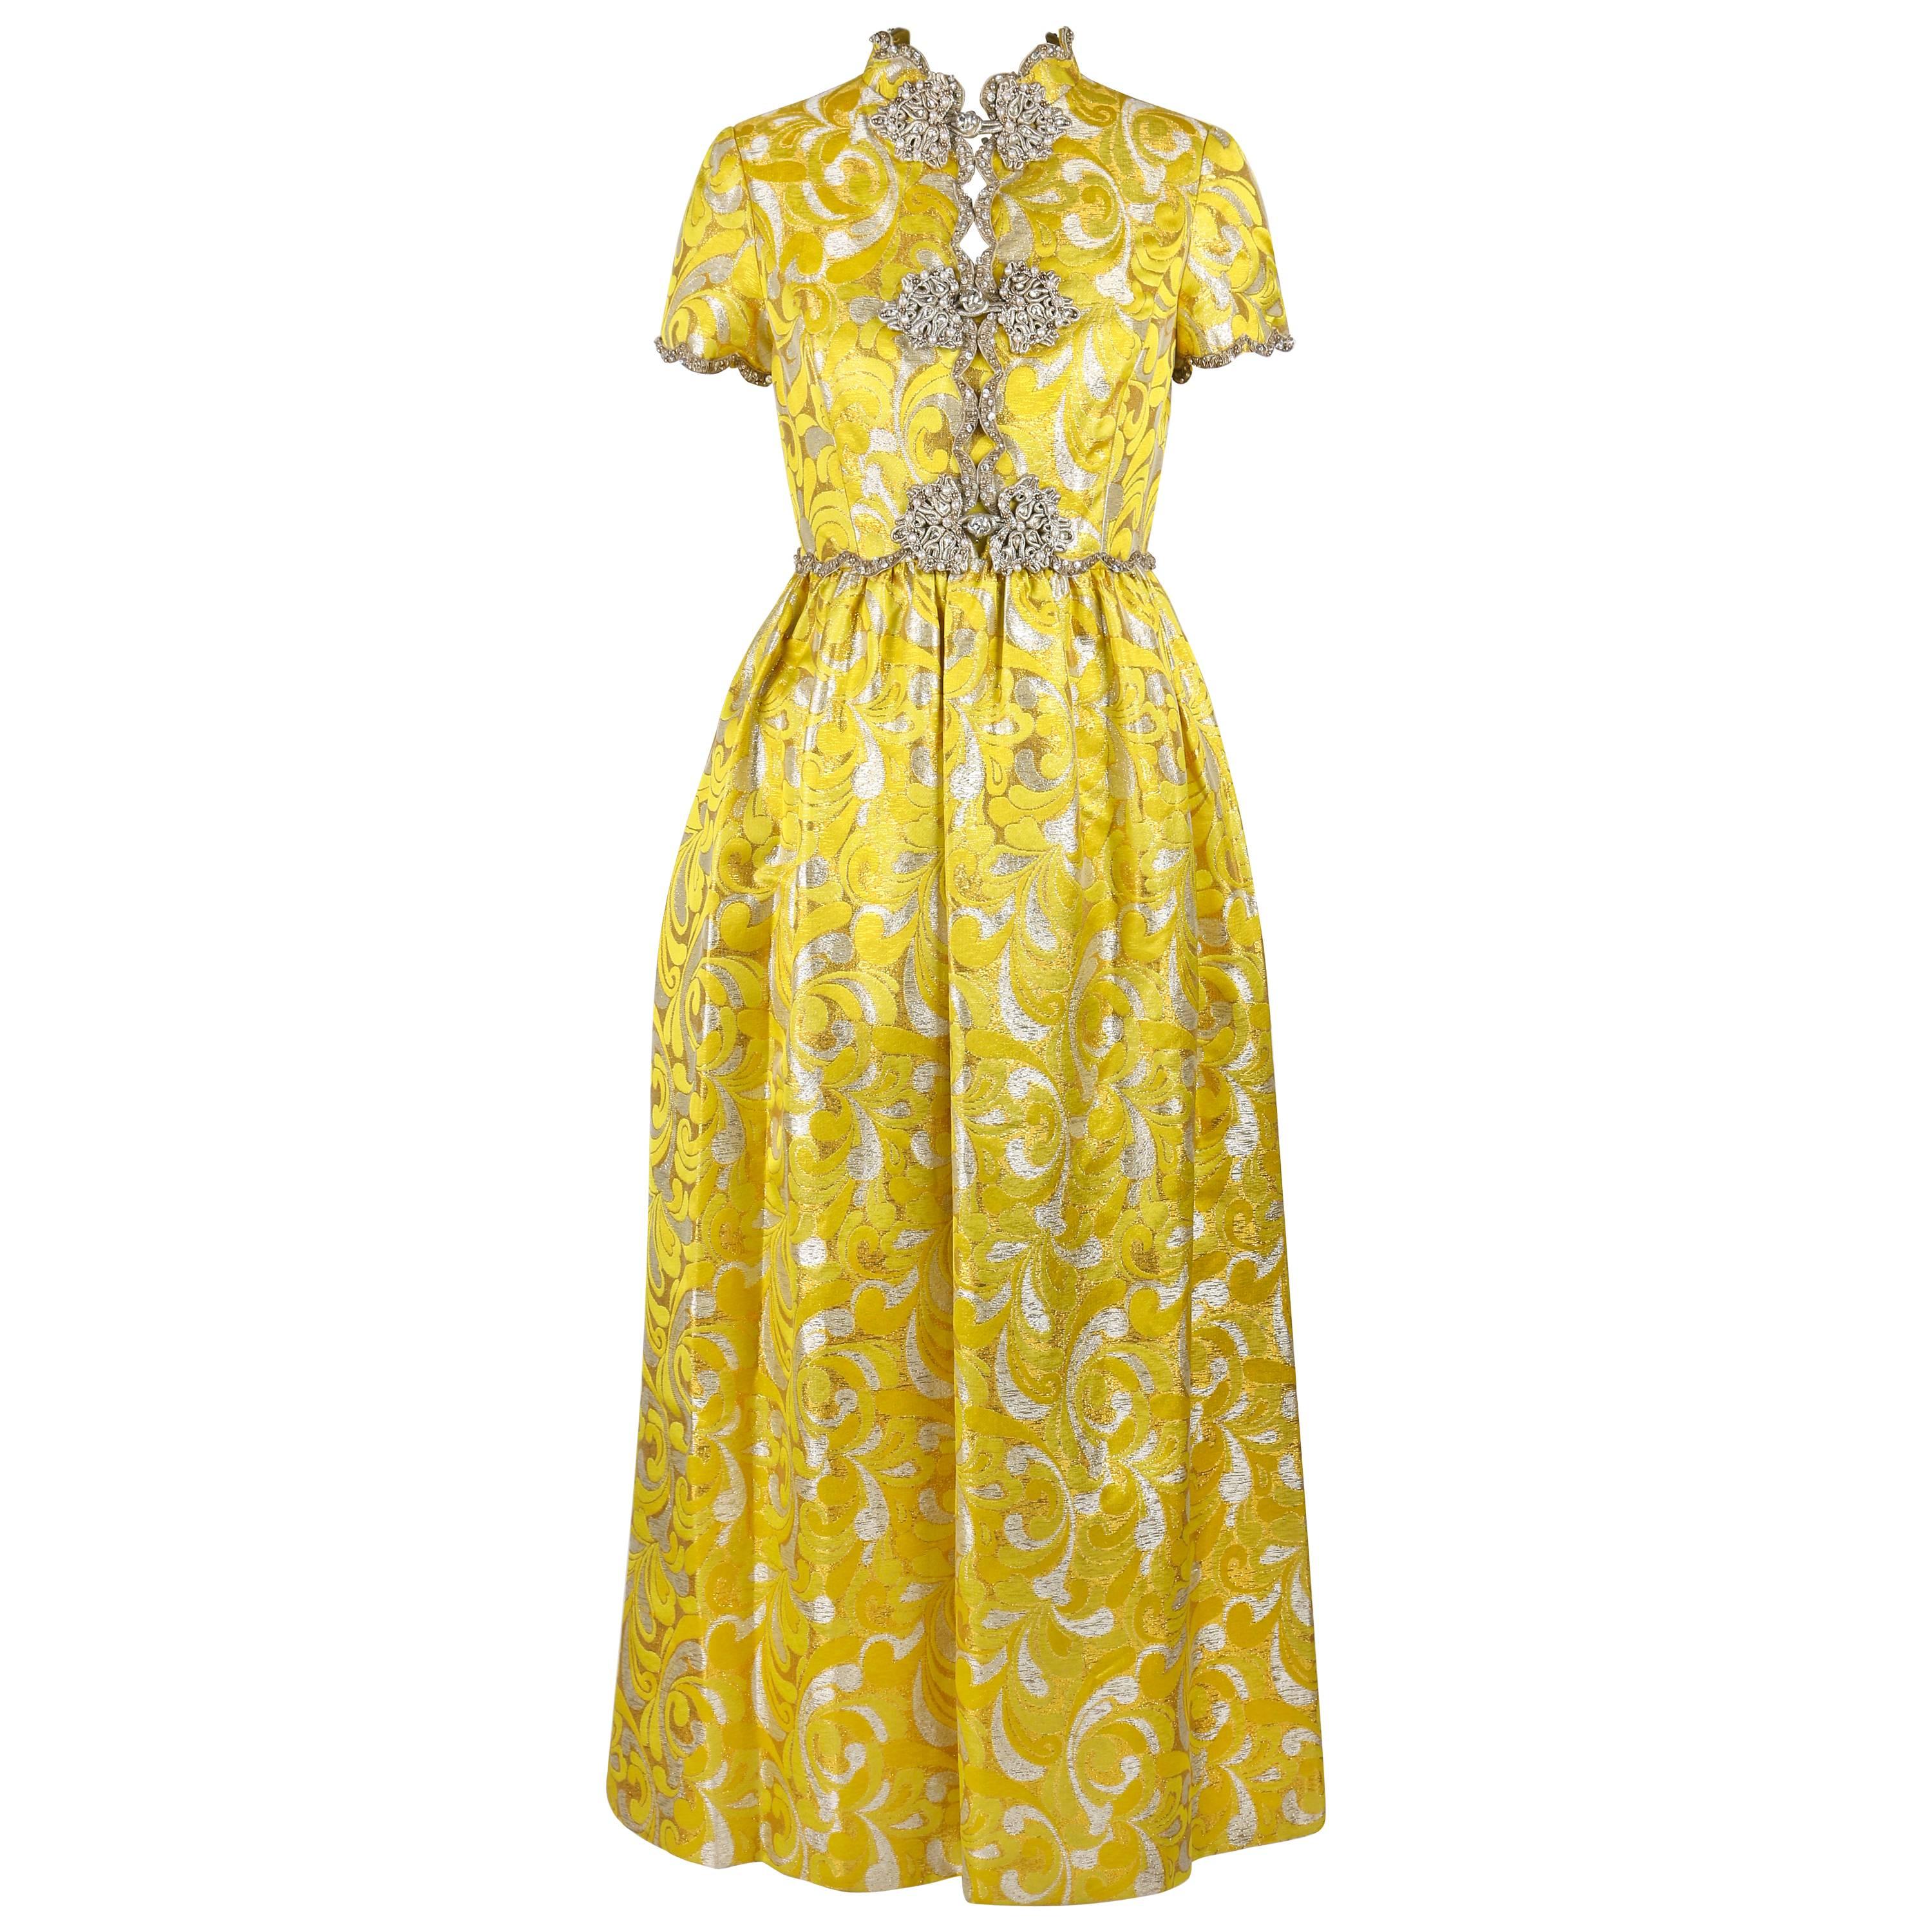 OSCAR de la RENTA c.1968 Yellow Lurex Brocade Silk Beaded Evening Gown Dress